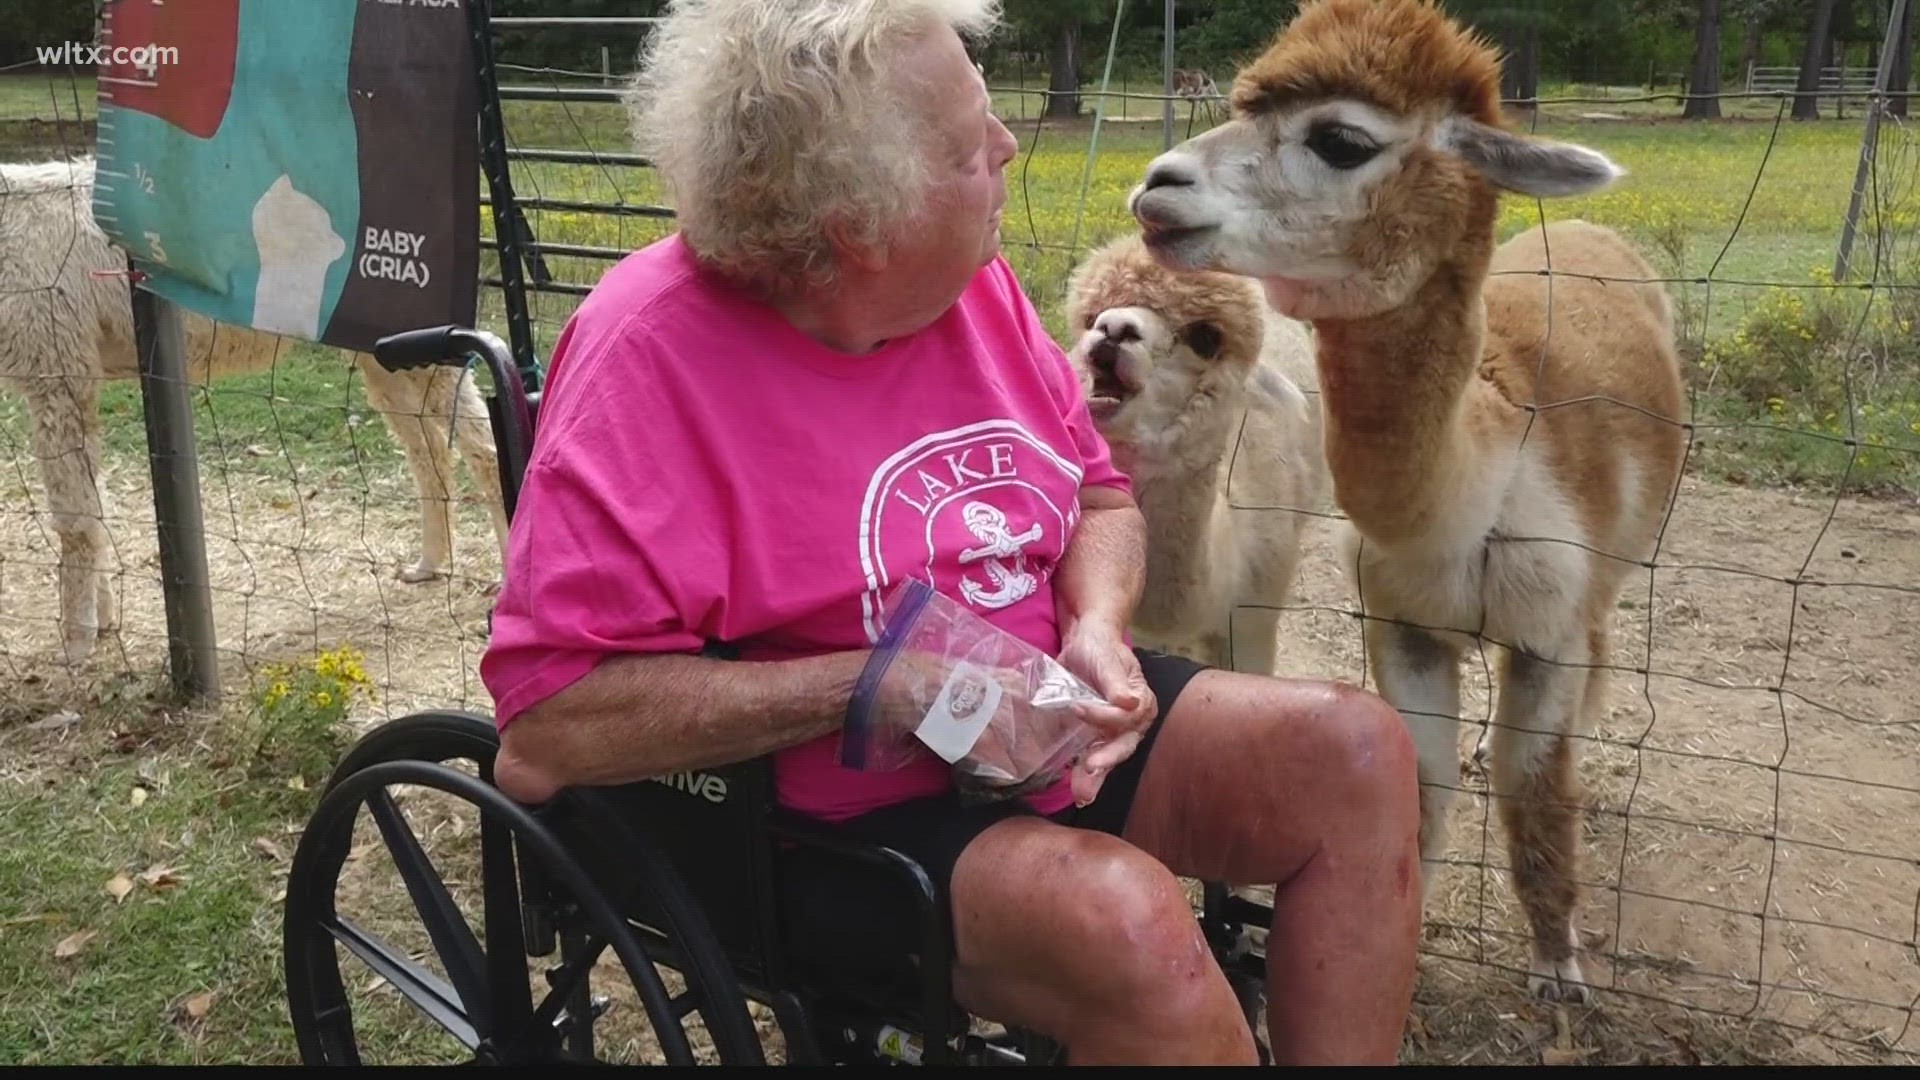 A local South Carolina farm teaches people about alpaca farming for Alpaca Farm Day.